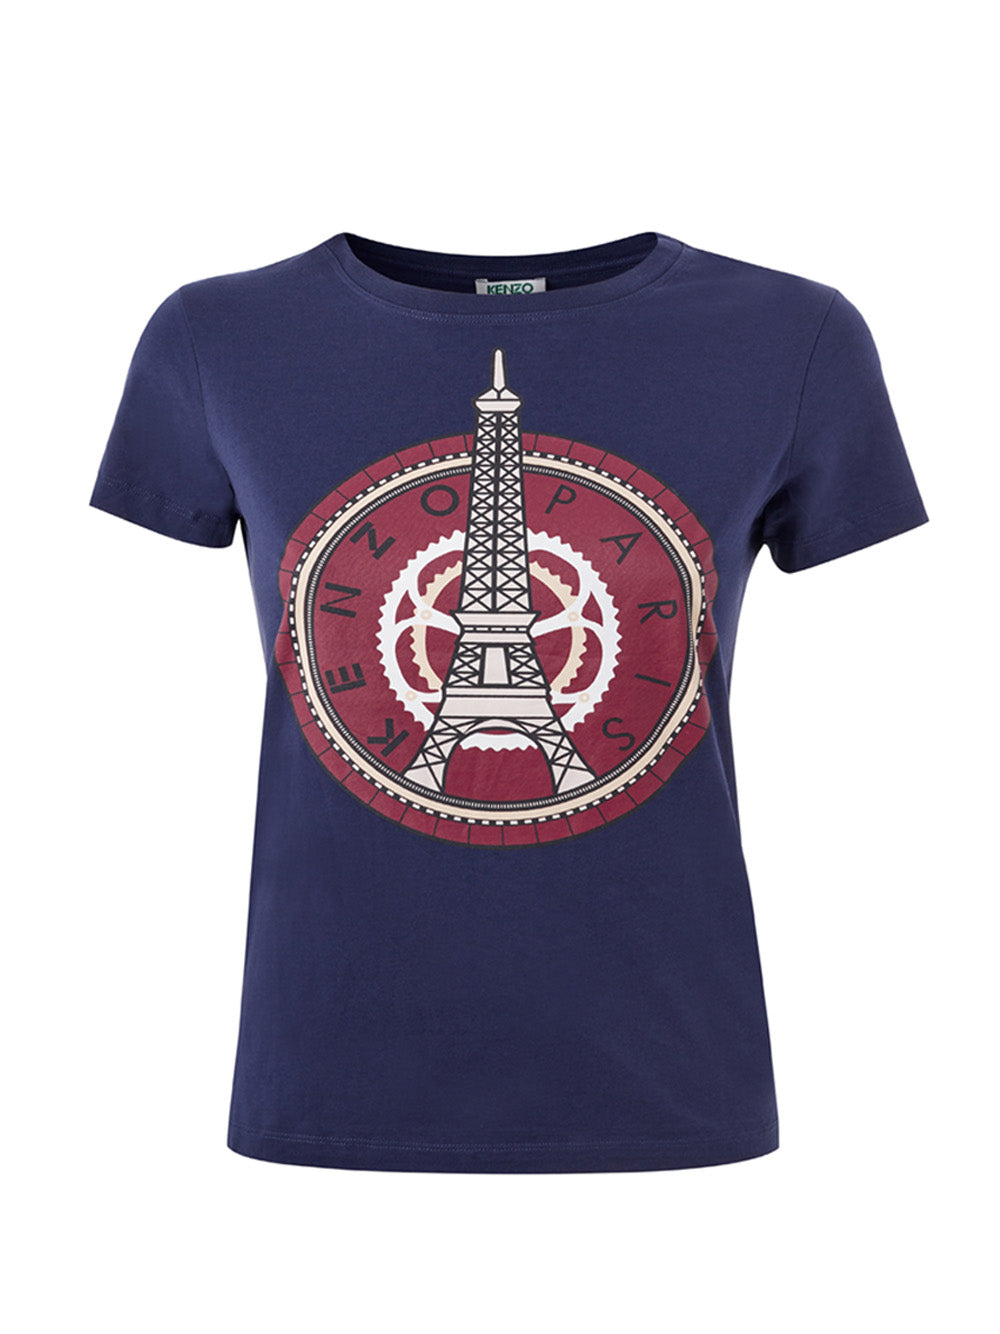 T-Shirt Kenzo Tour Eiffel